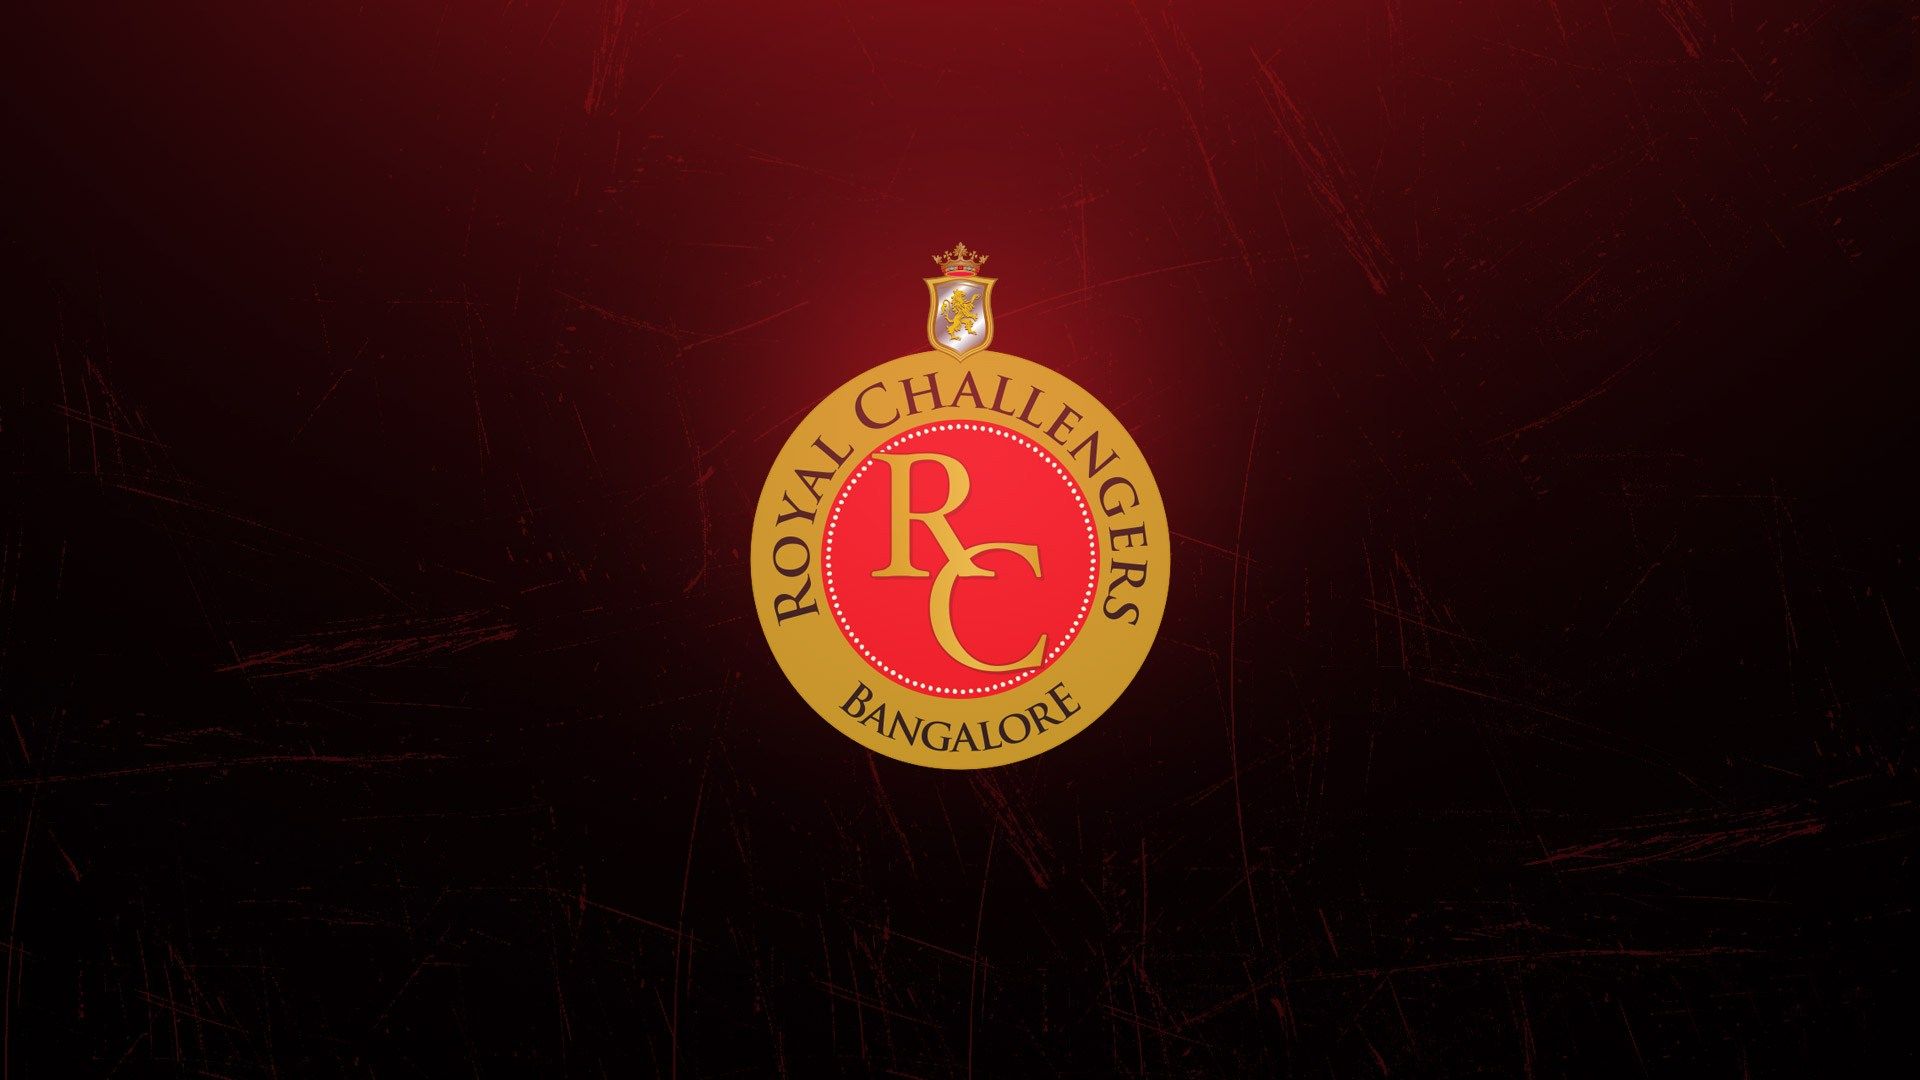 RCB Logo Image 2019 & Wallpaper